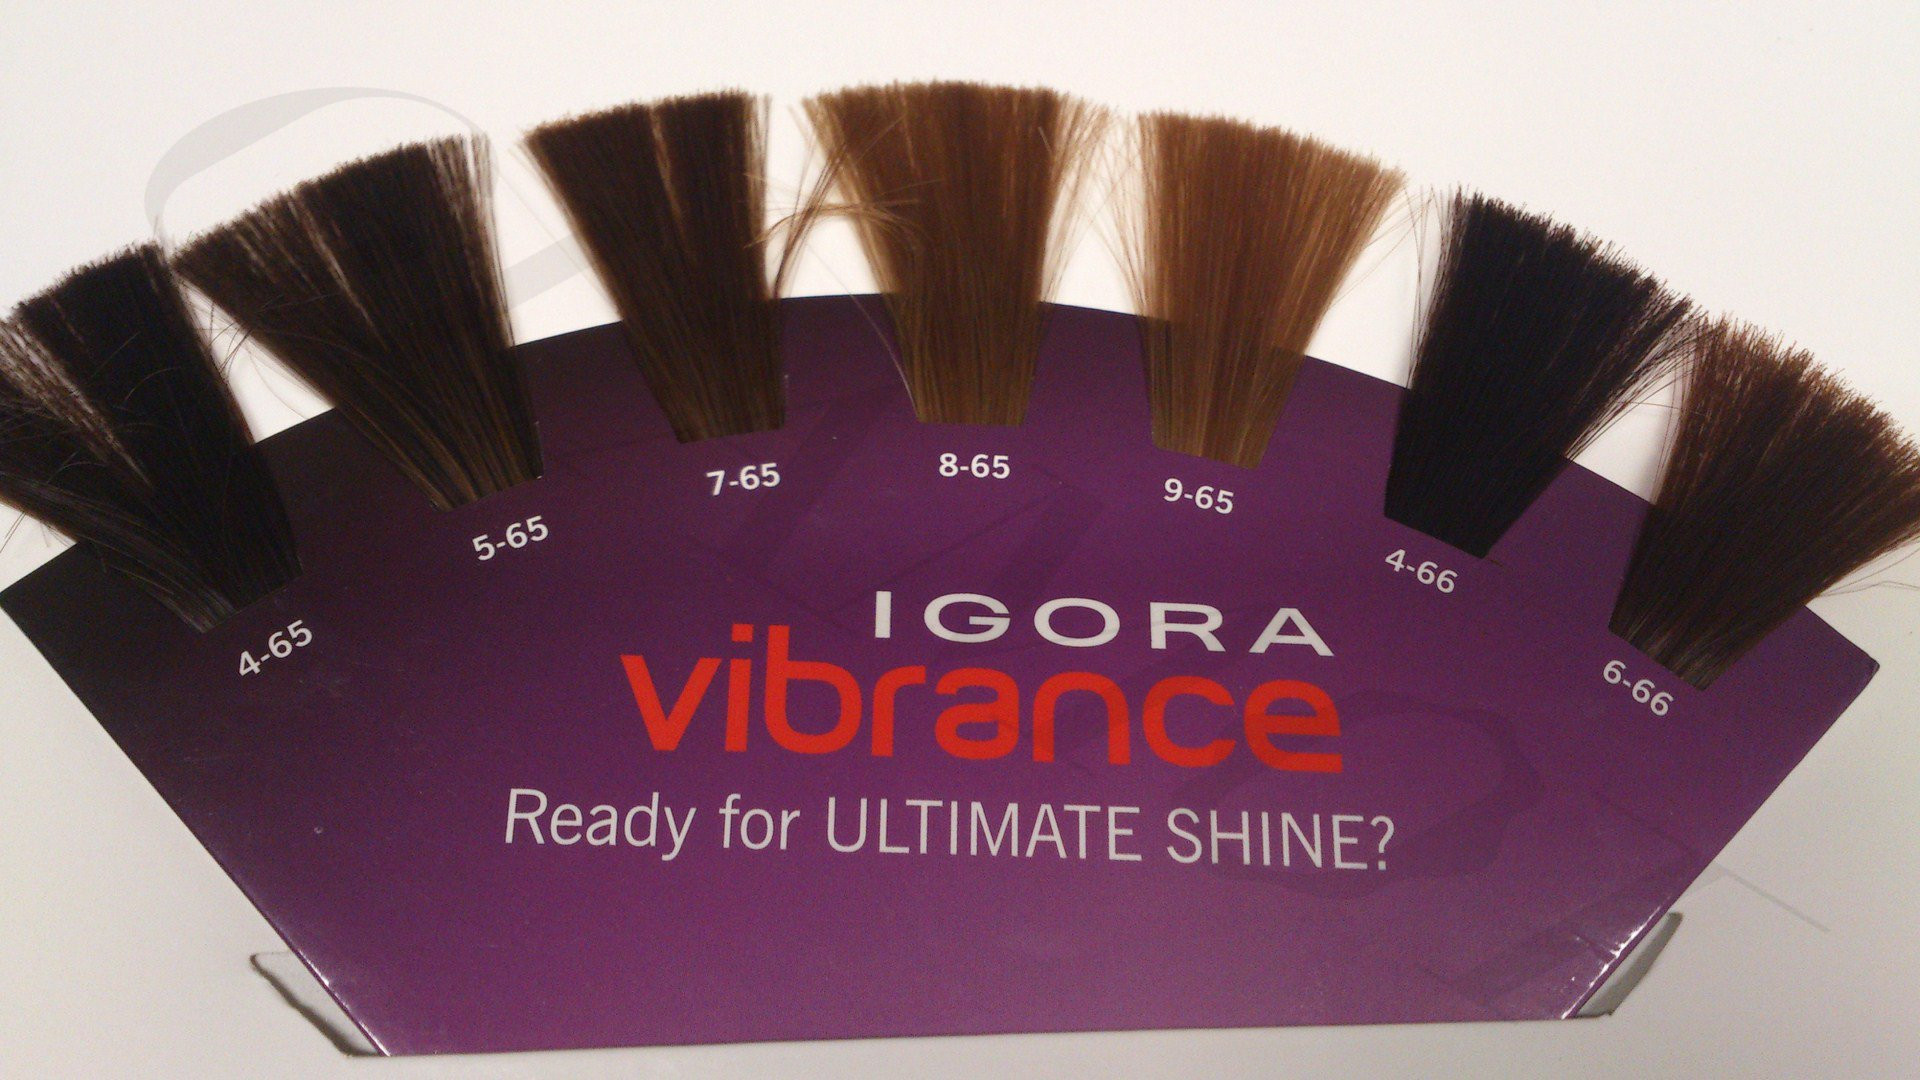 5. Schwarzkopf Professional Igora Vibrance Demi-Permanent Hair Color in Blueberry - wide 7